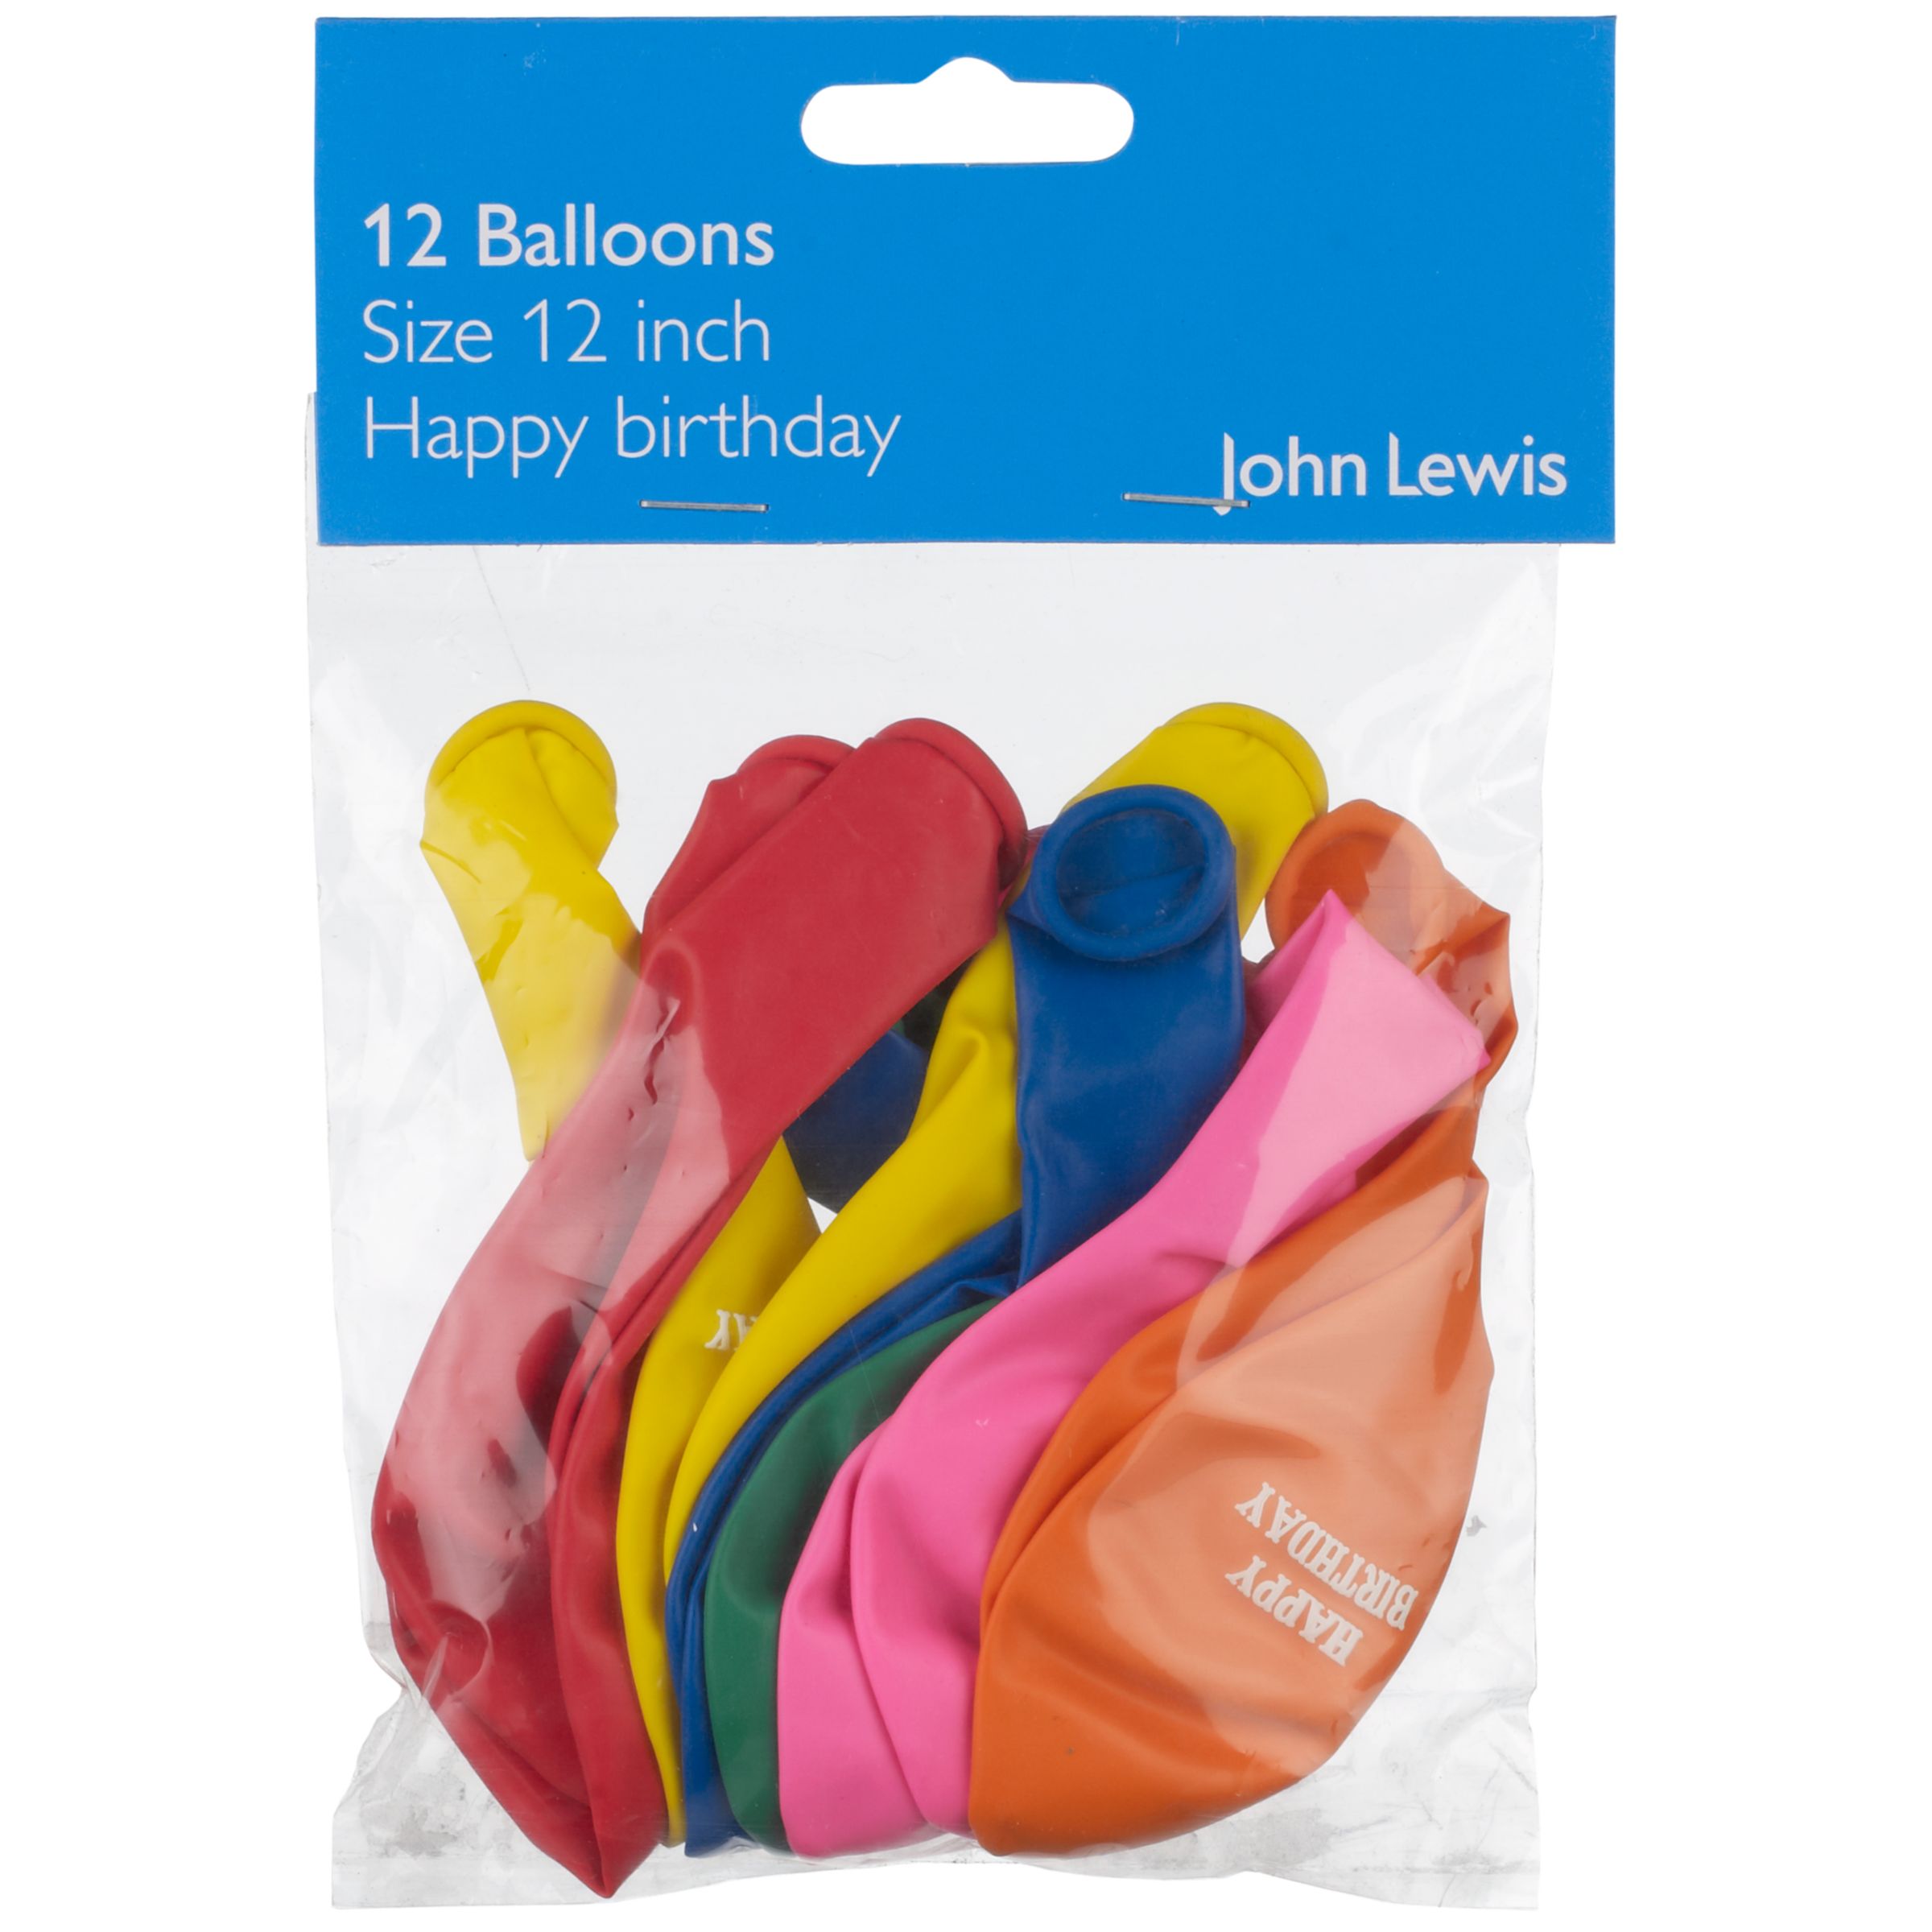 John Lewis Balloons, Pack of 12, Happy Birthday